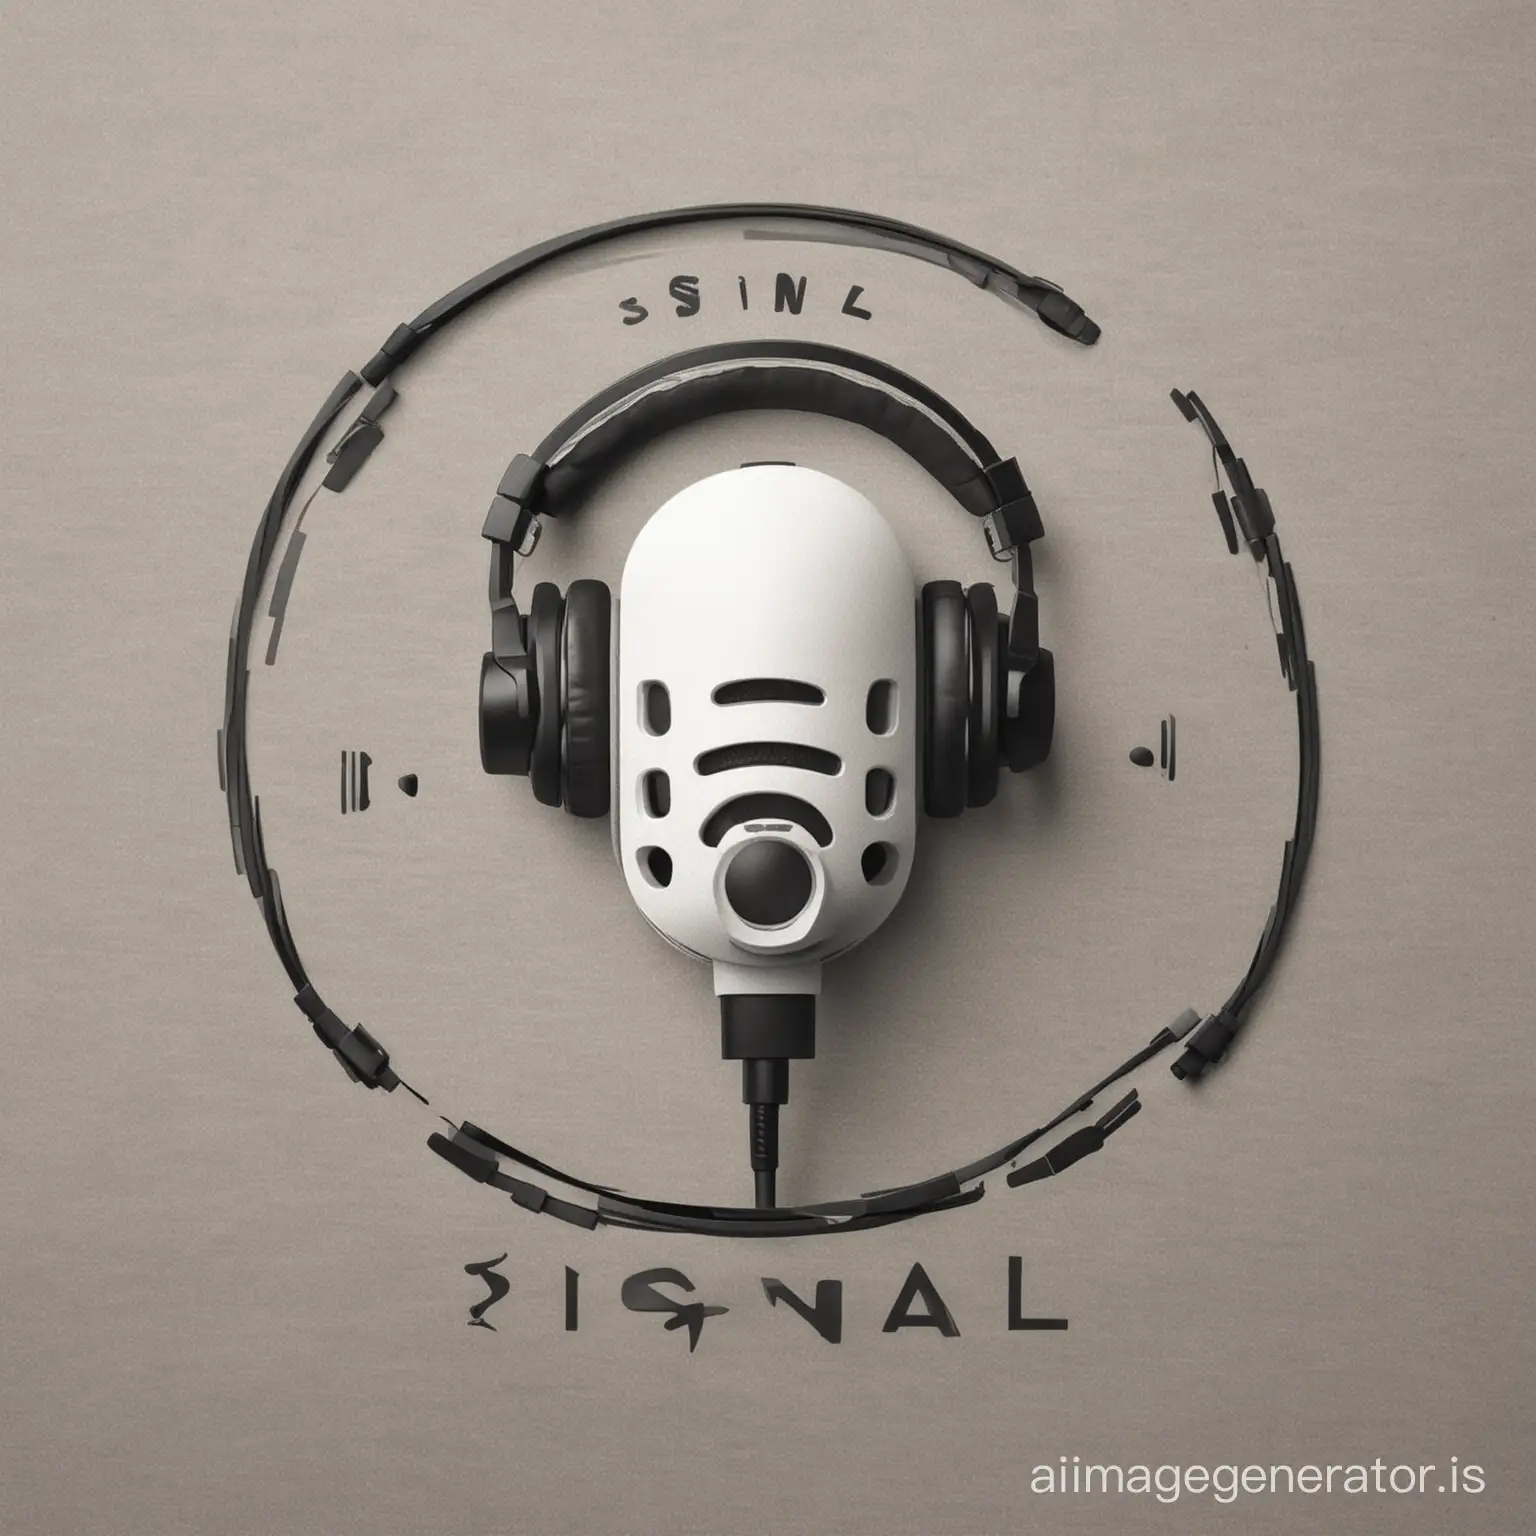 Minimalist-Logo-Design-Signal-Recording-Studio-with-Microphone-and-Headphones